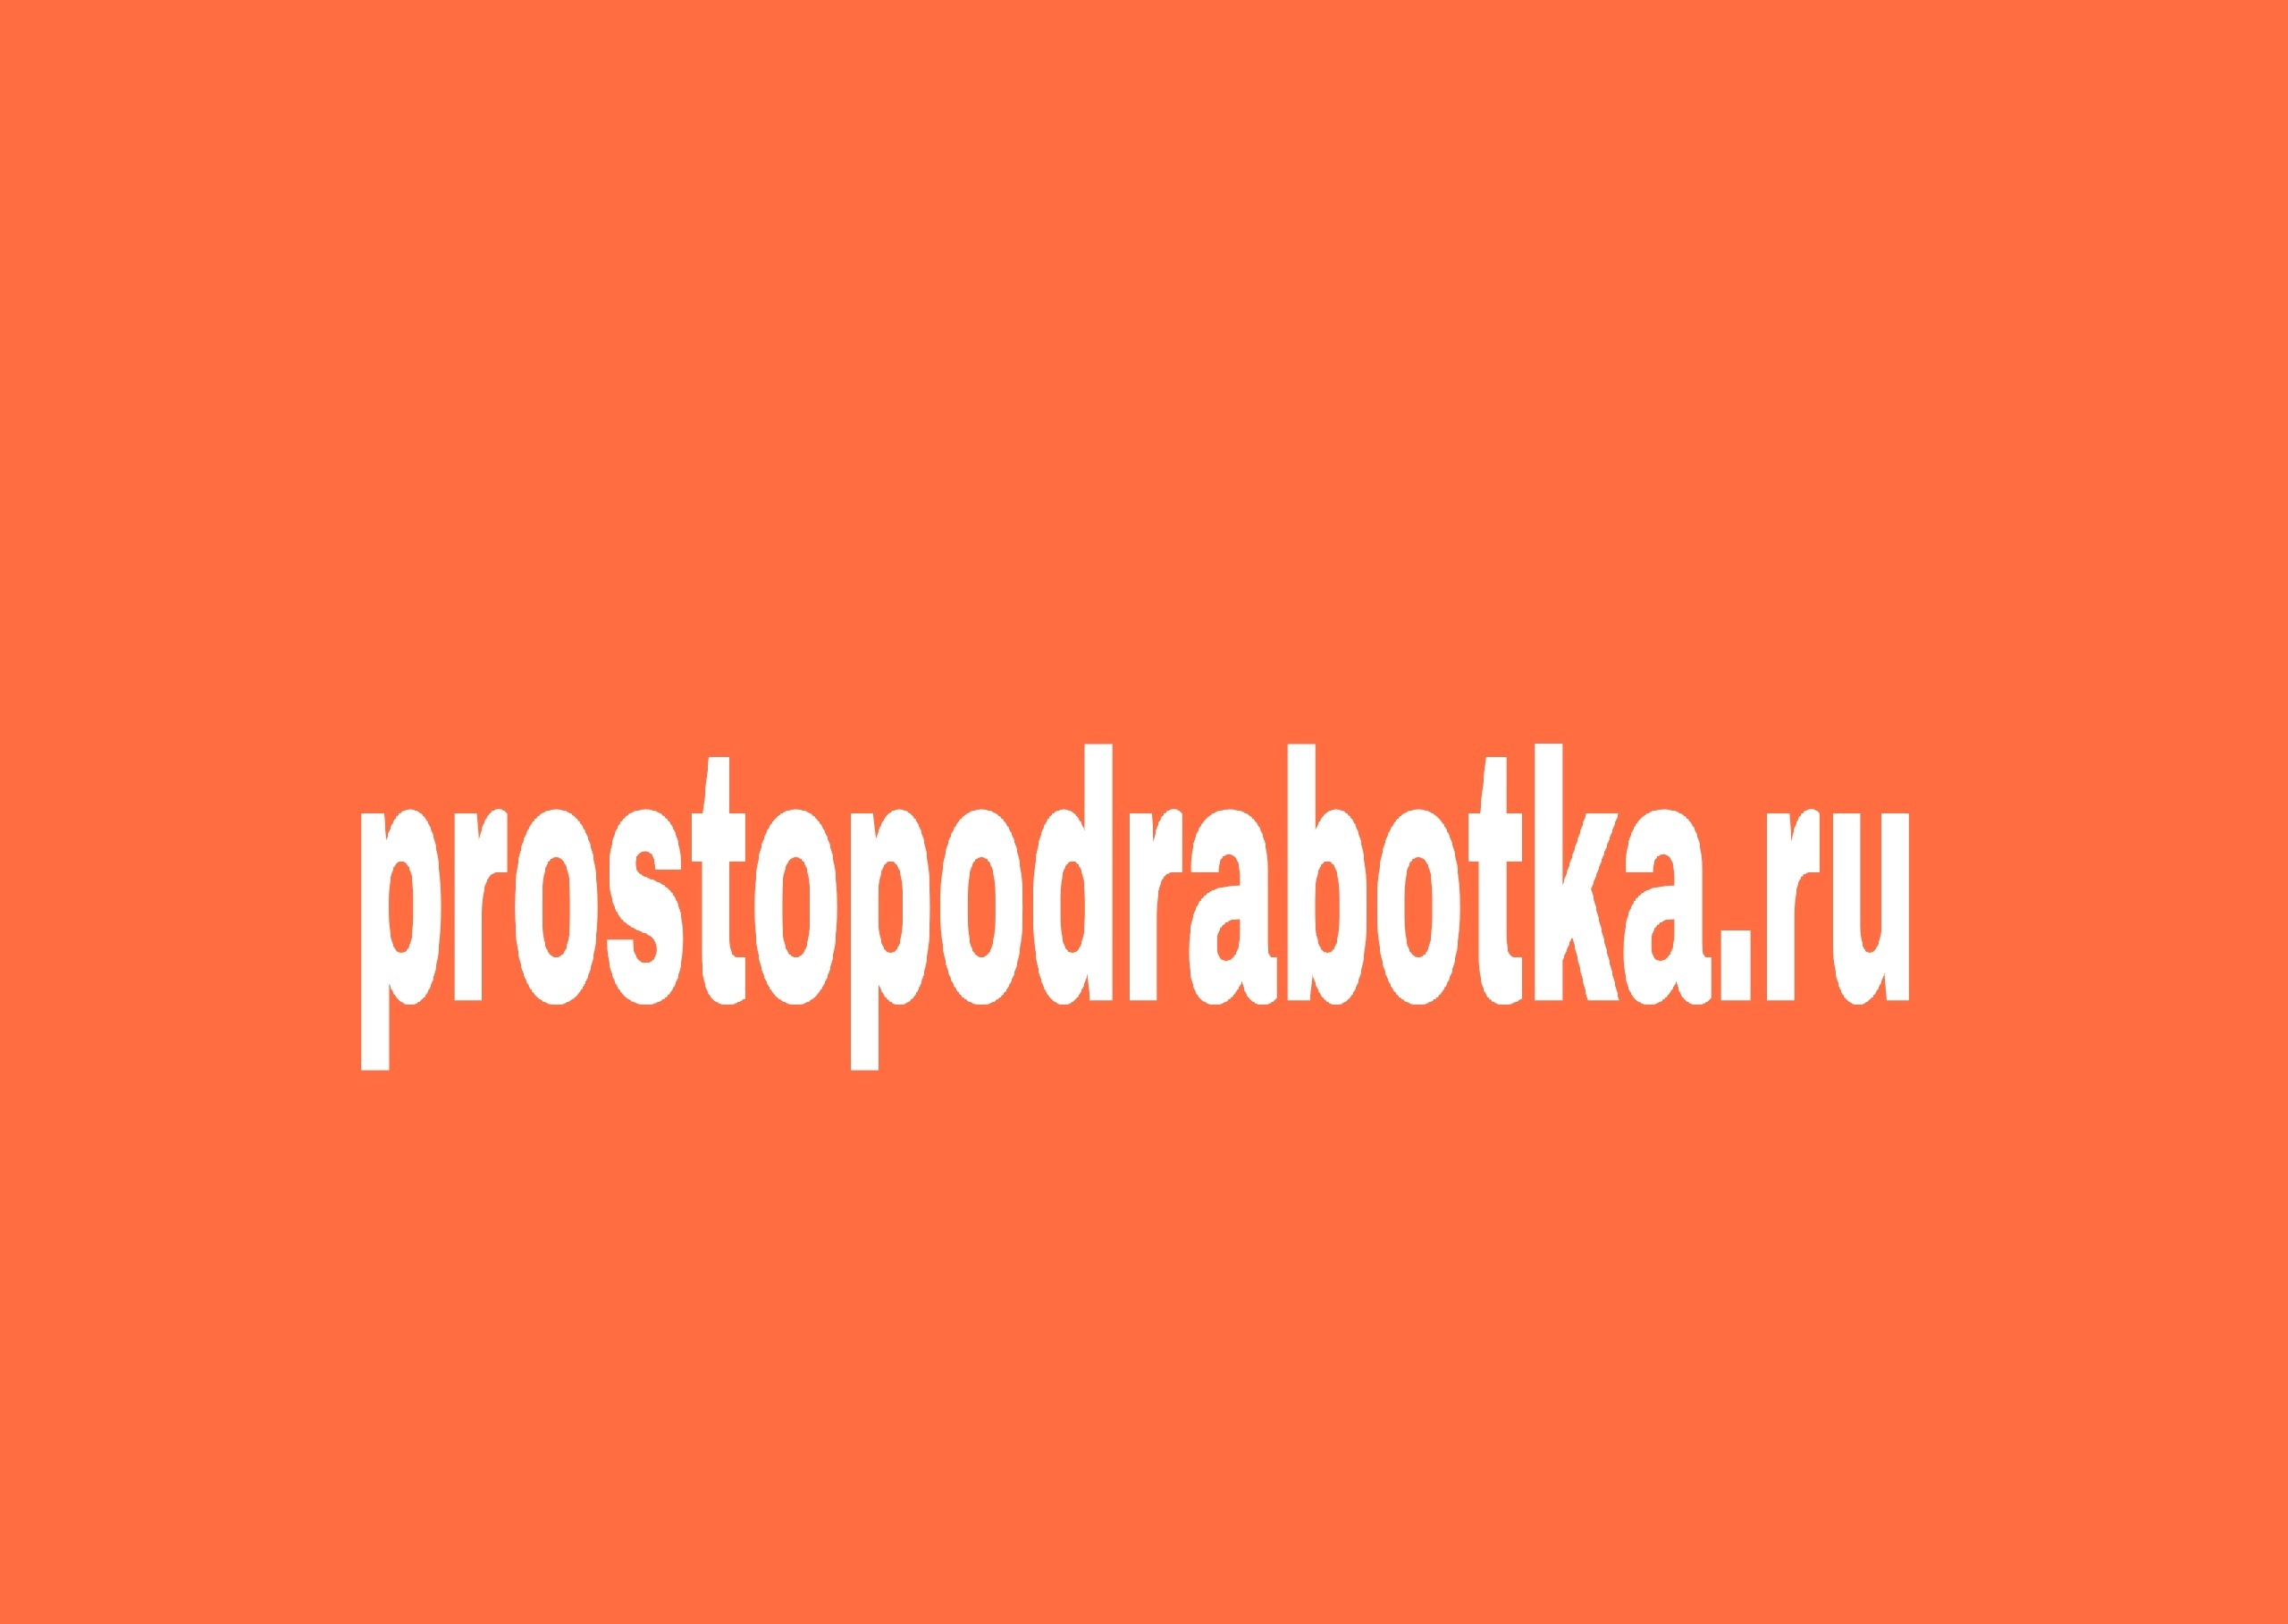 Логотип группы prostopodrabotka.ru